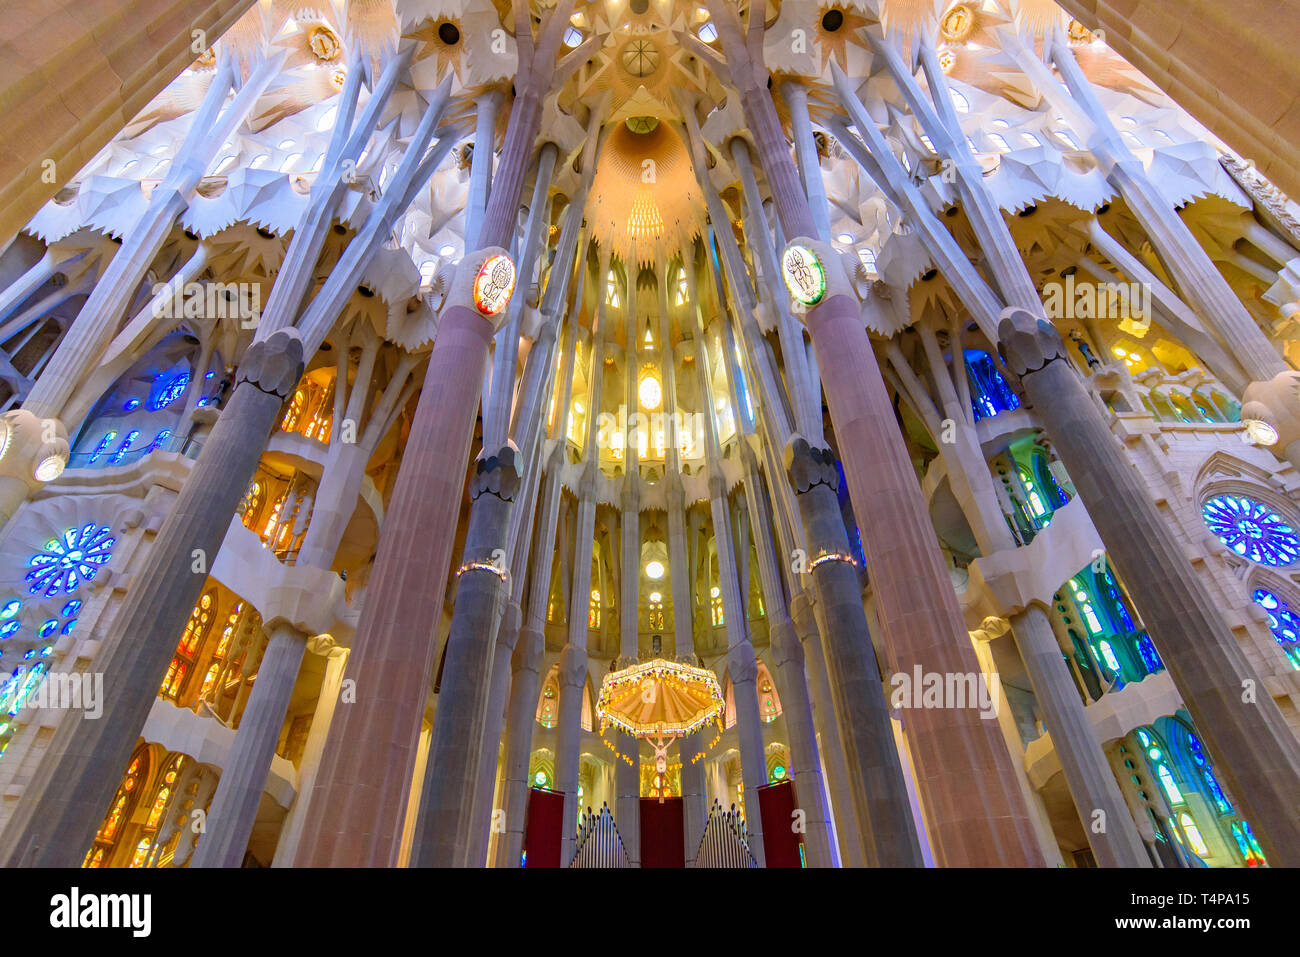 Descubrir 68+ imagen gaudi church barcelona interior - Thcshoanghoatham ...